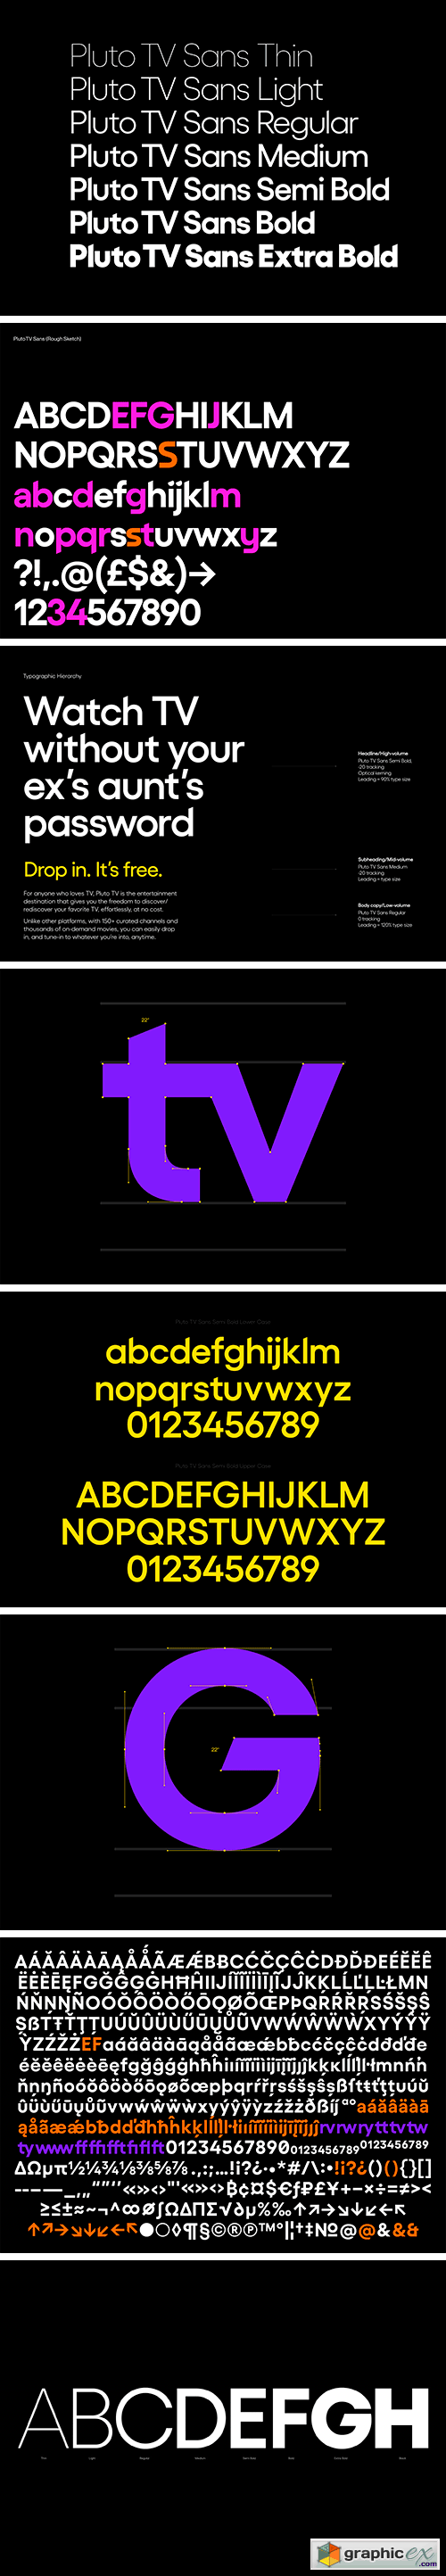  Pluto TV Sans Font Family 